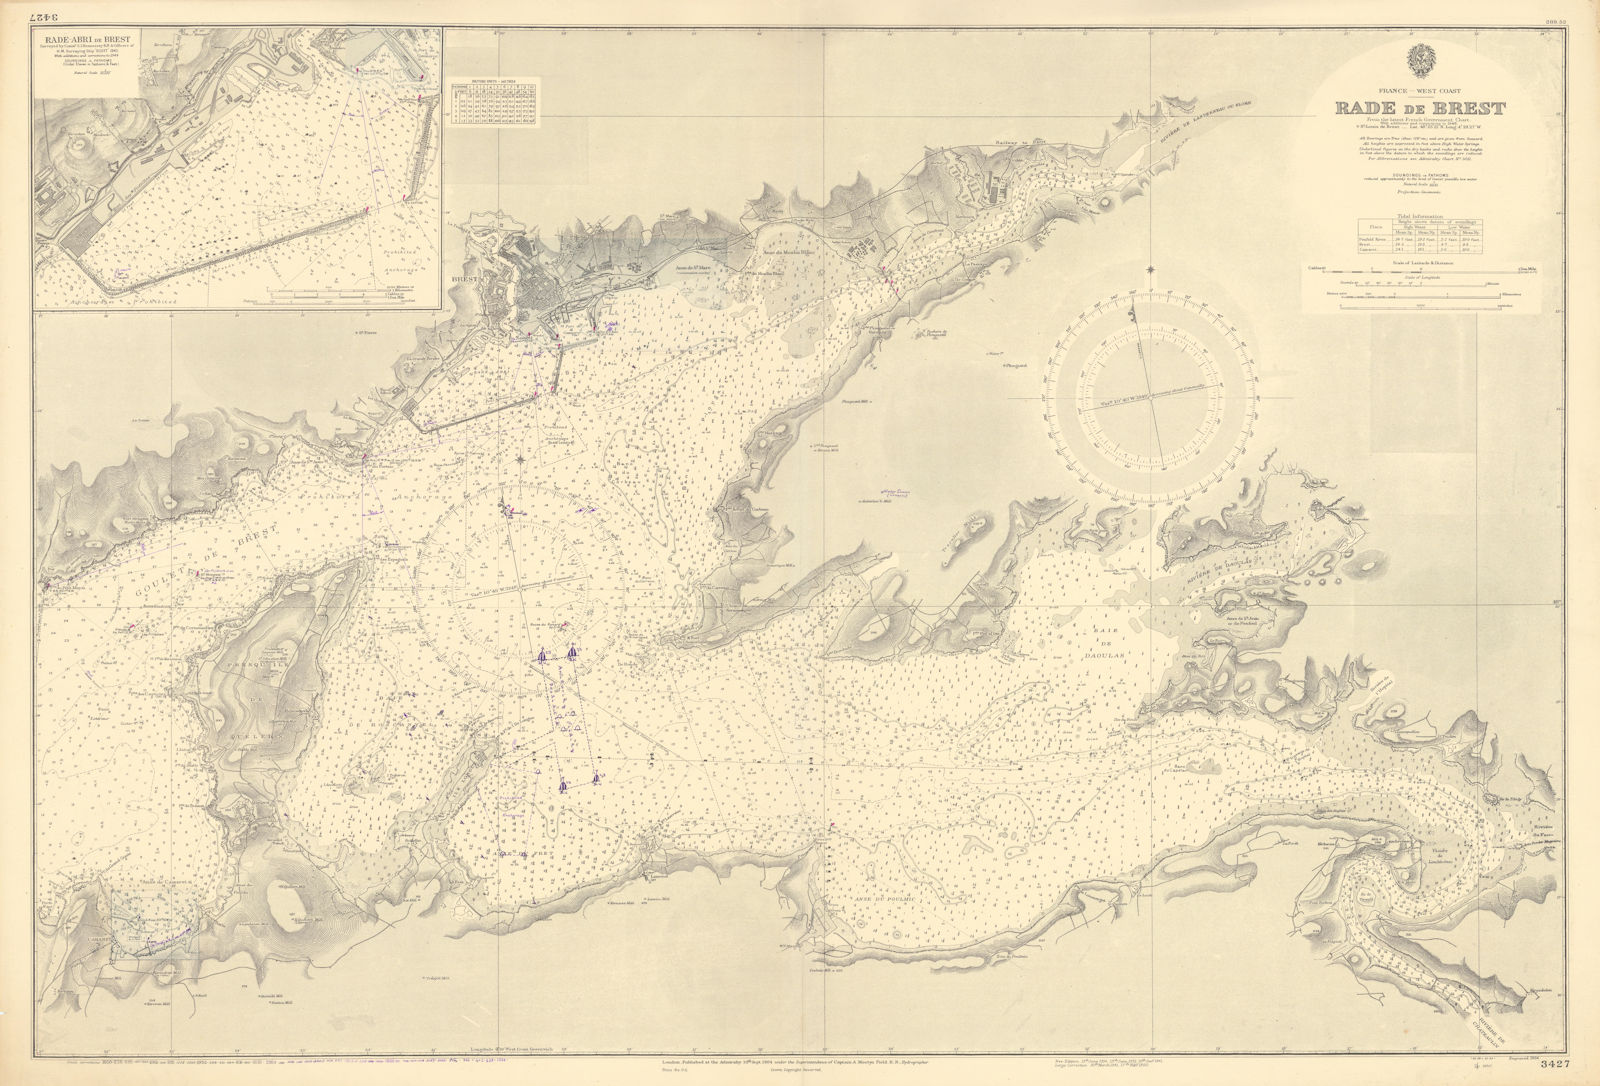 Brest Rade & Rade-Abri. Finistère, Brittany. ADMIRALTY sea chart 1904 (1956) map